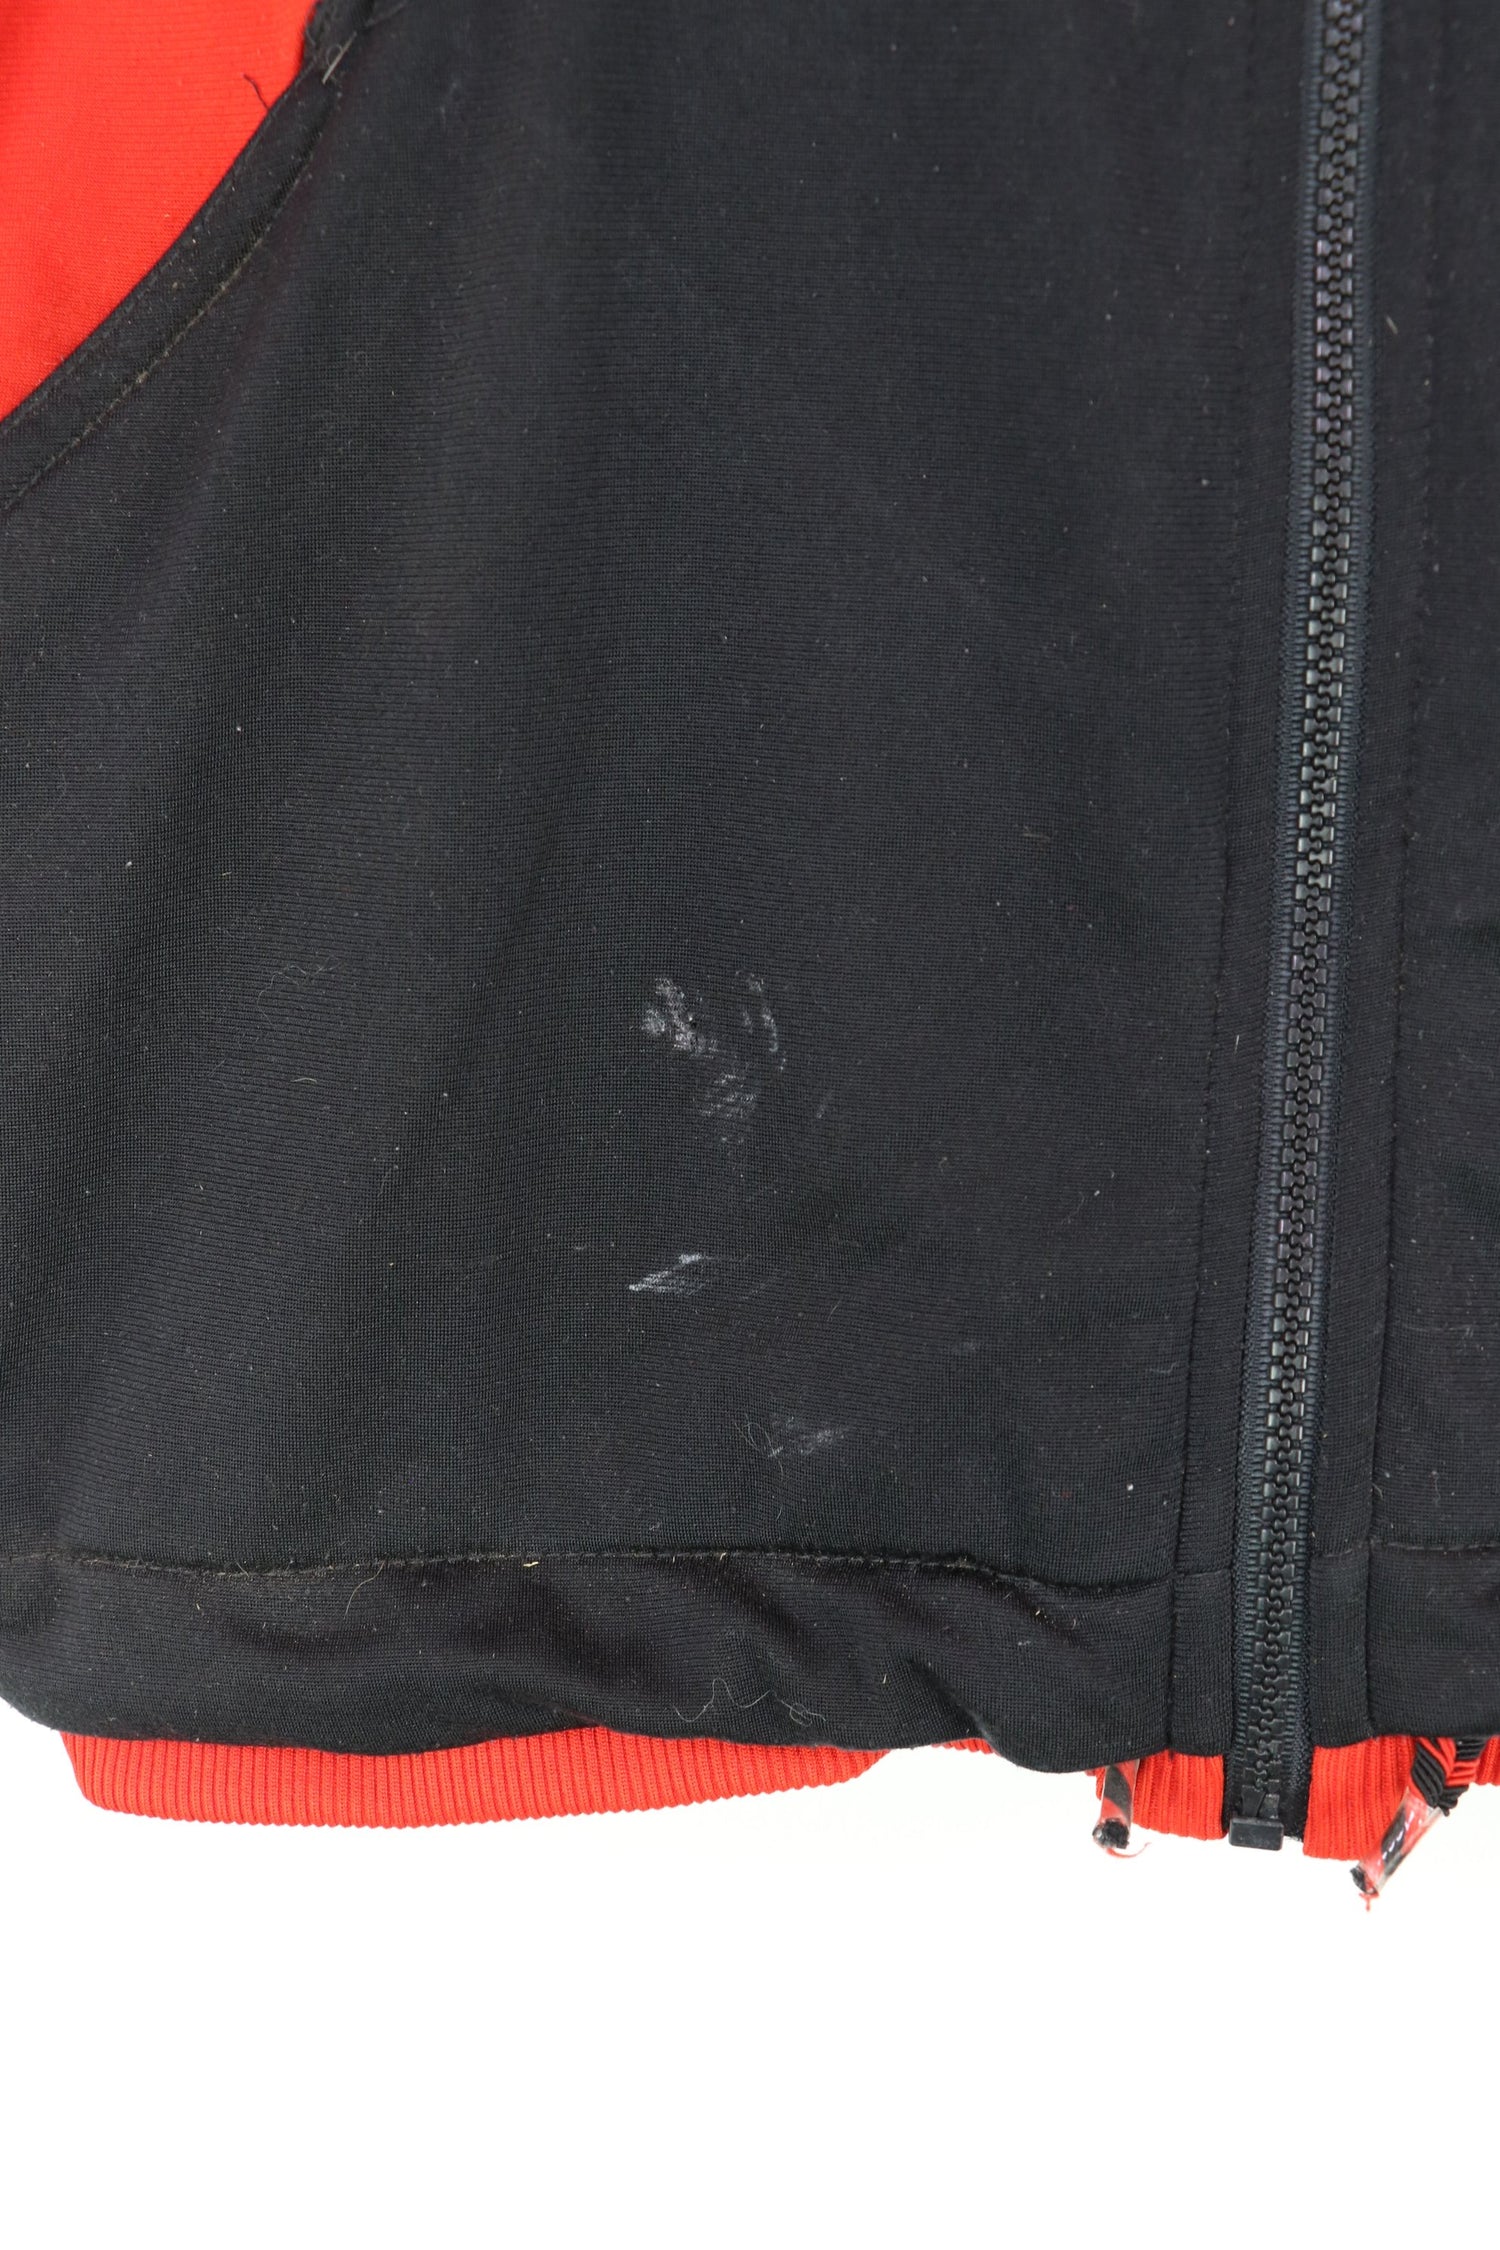 Nike S/S Track Jacket Red/Black Medium